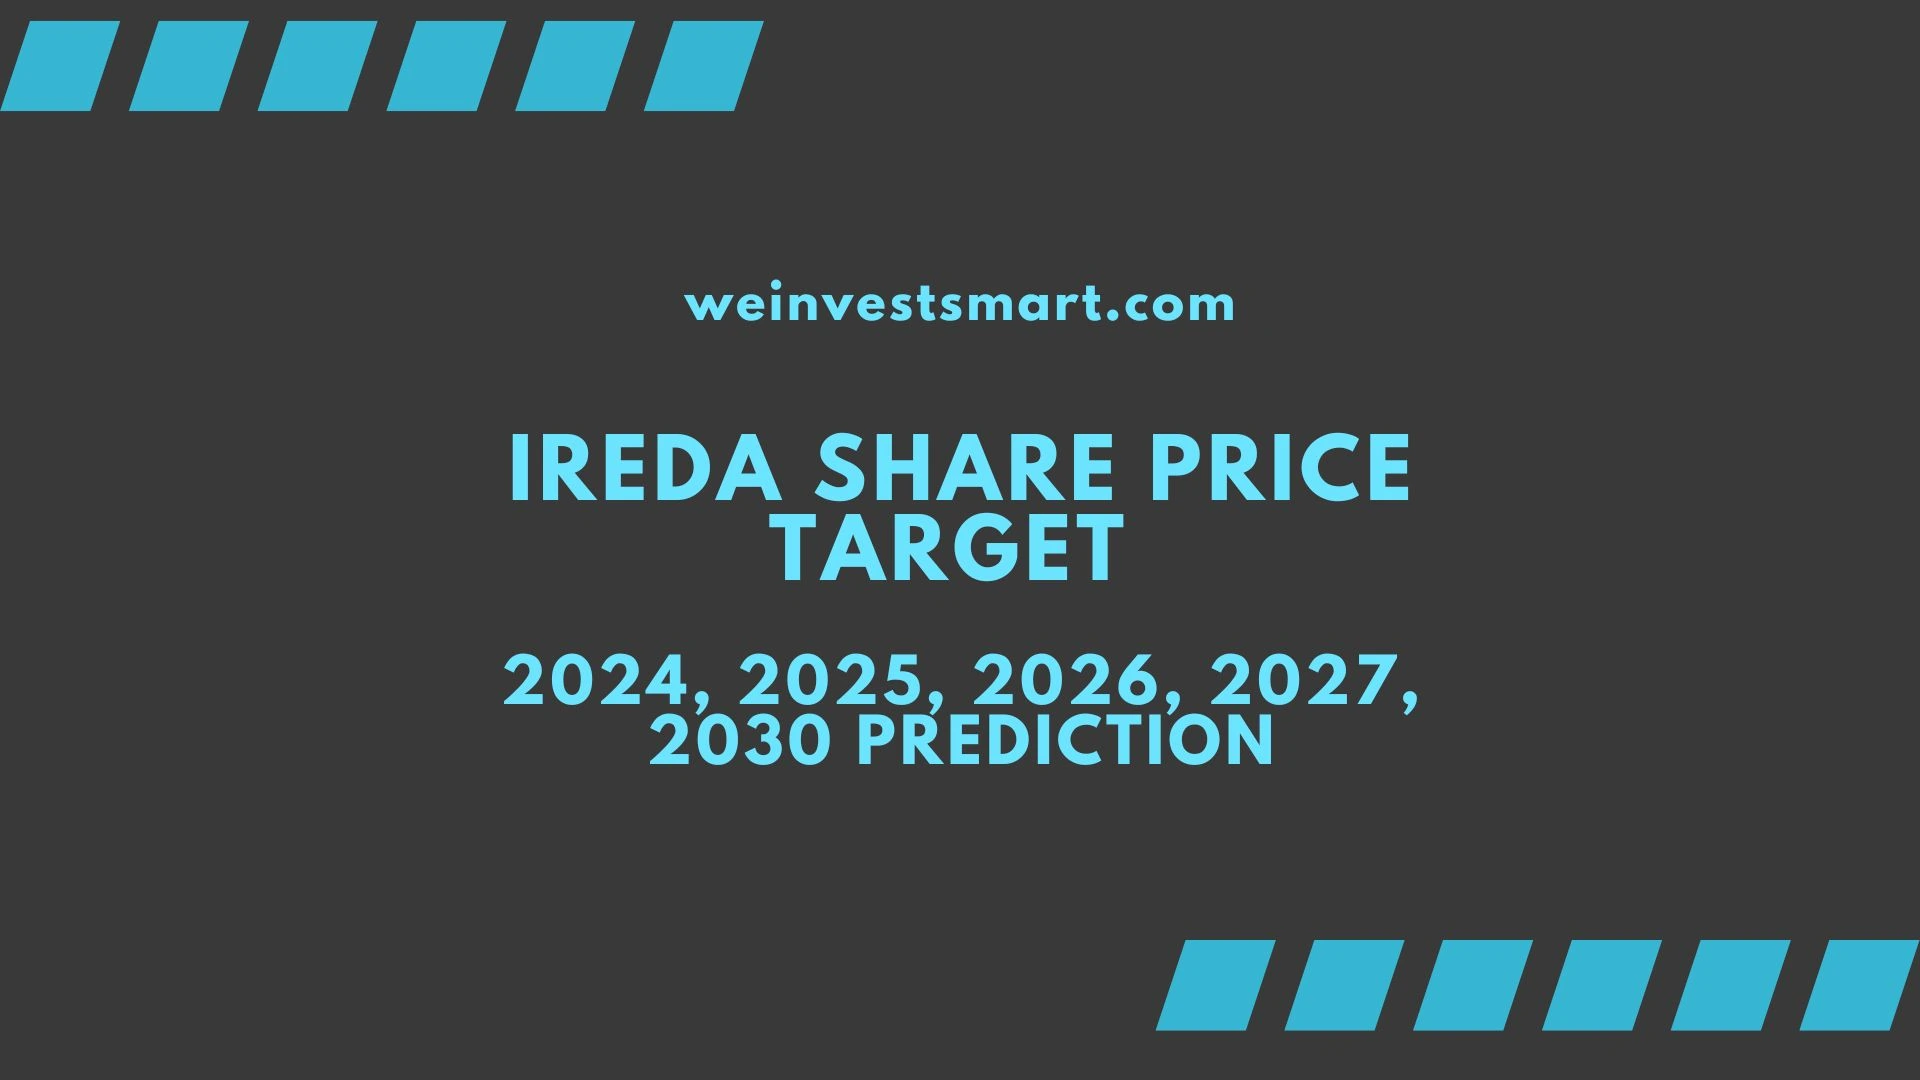 IREDA share price target 2024, 2025, 2026, 2027, 2030 prediction